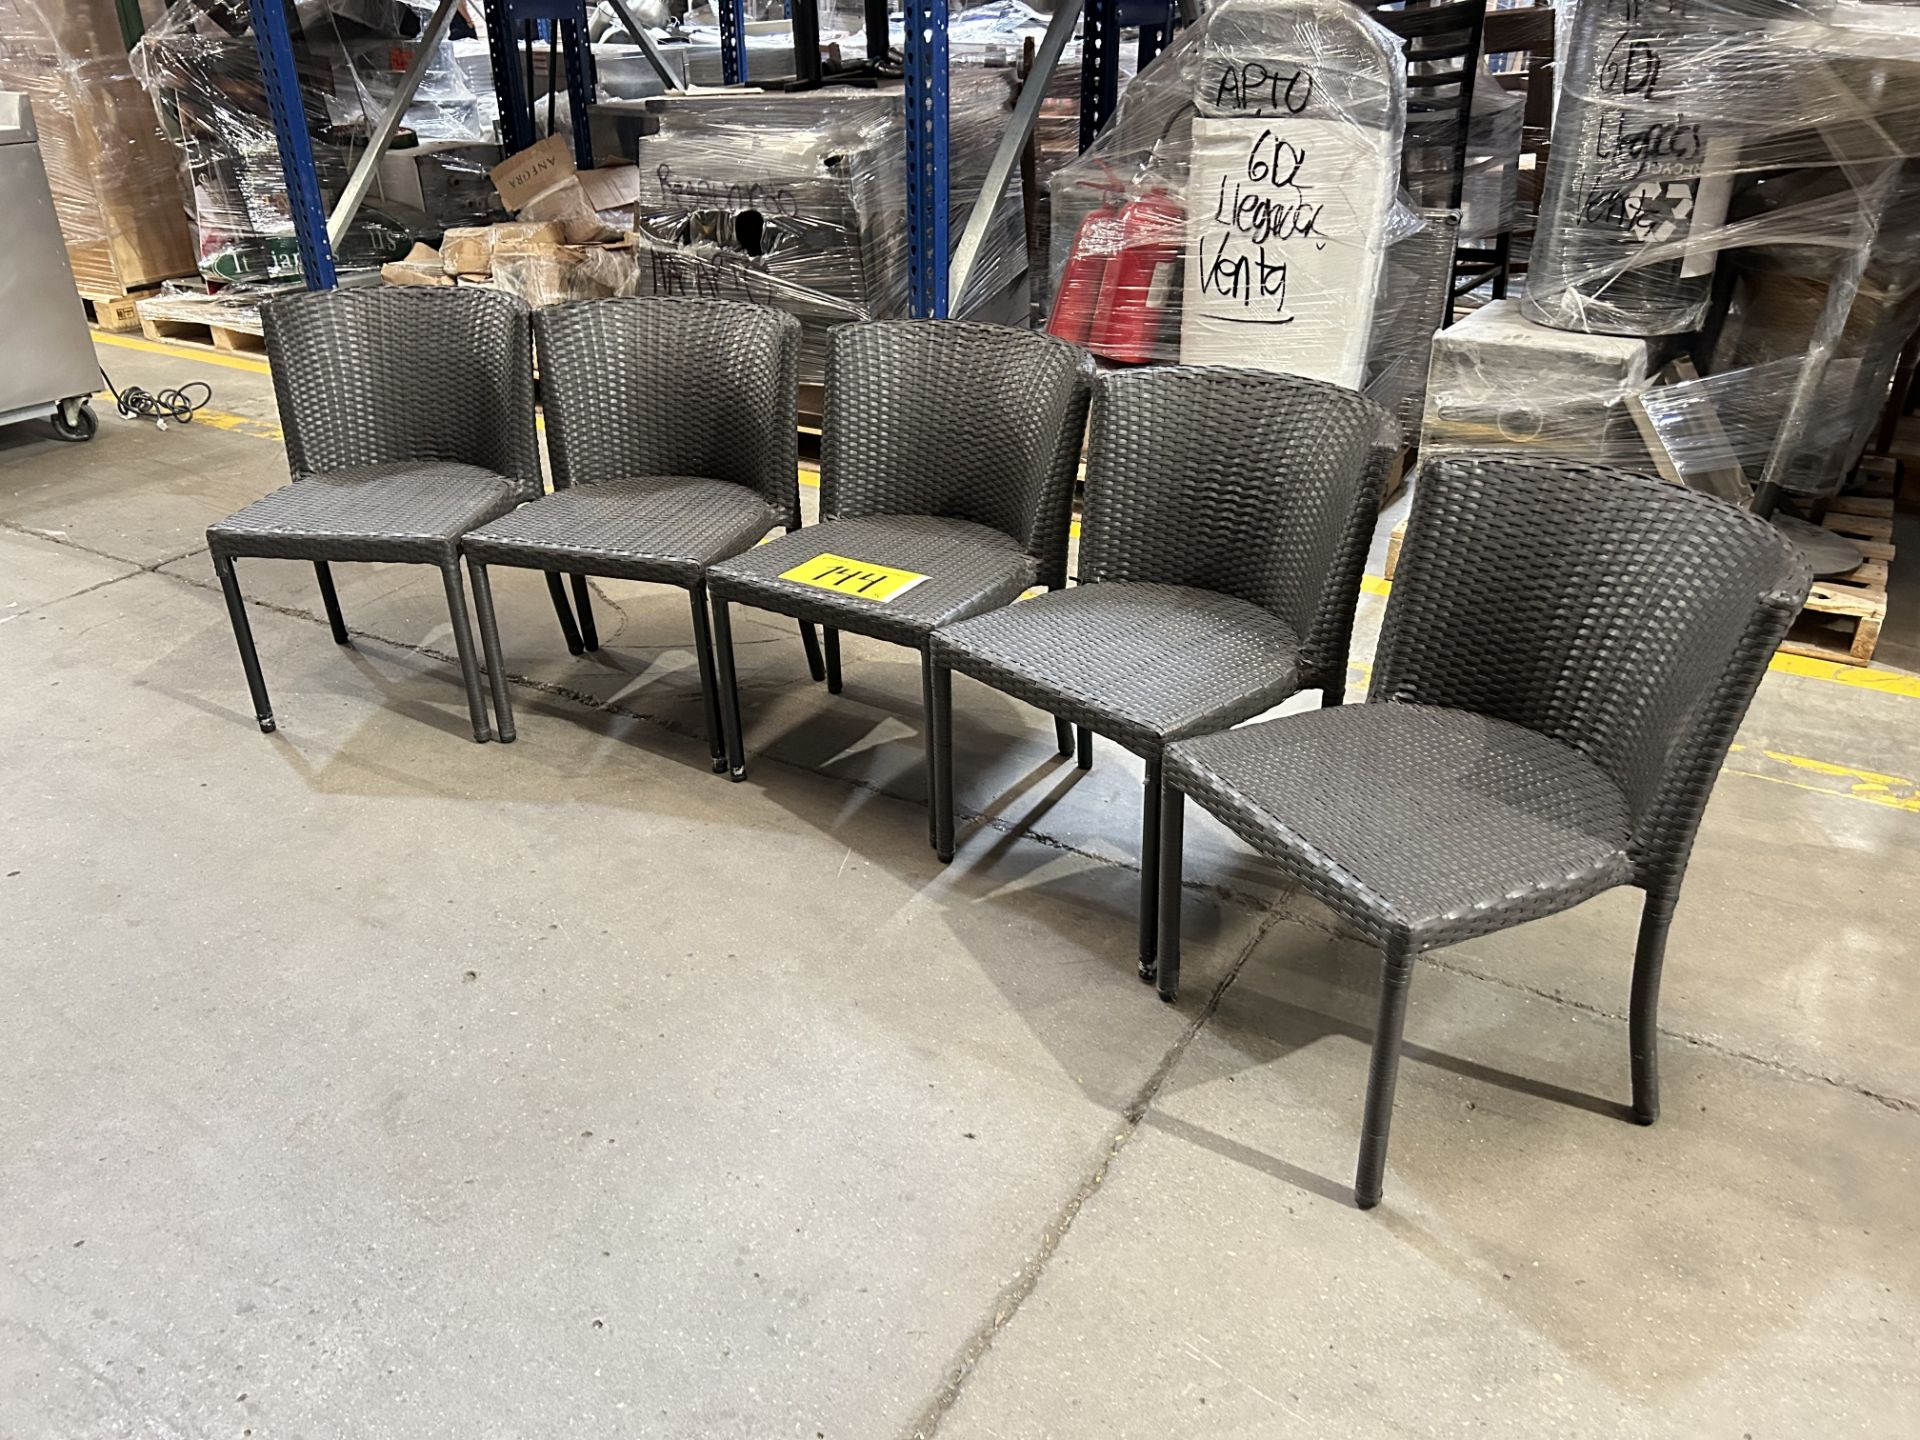 5 sillas de ratán respaldo curvo para exterior Color Café Medidas 55 cm x 62 cm x 74 cm (Equipo Usa - Image 3 of 5